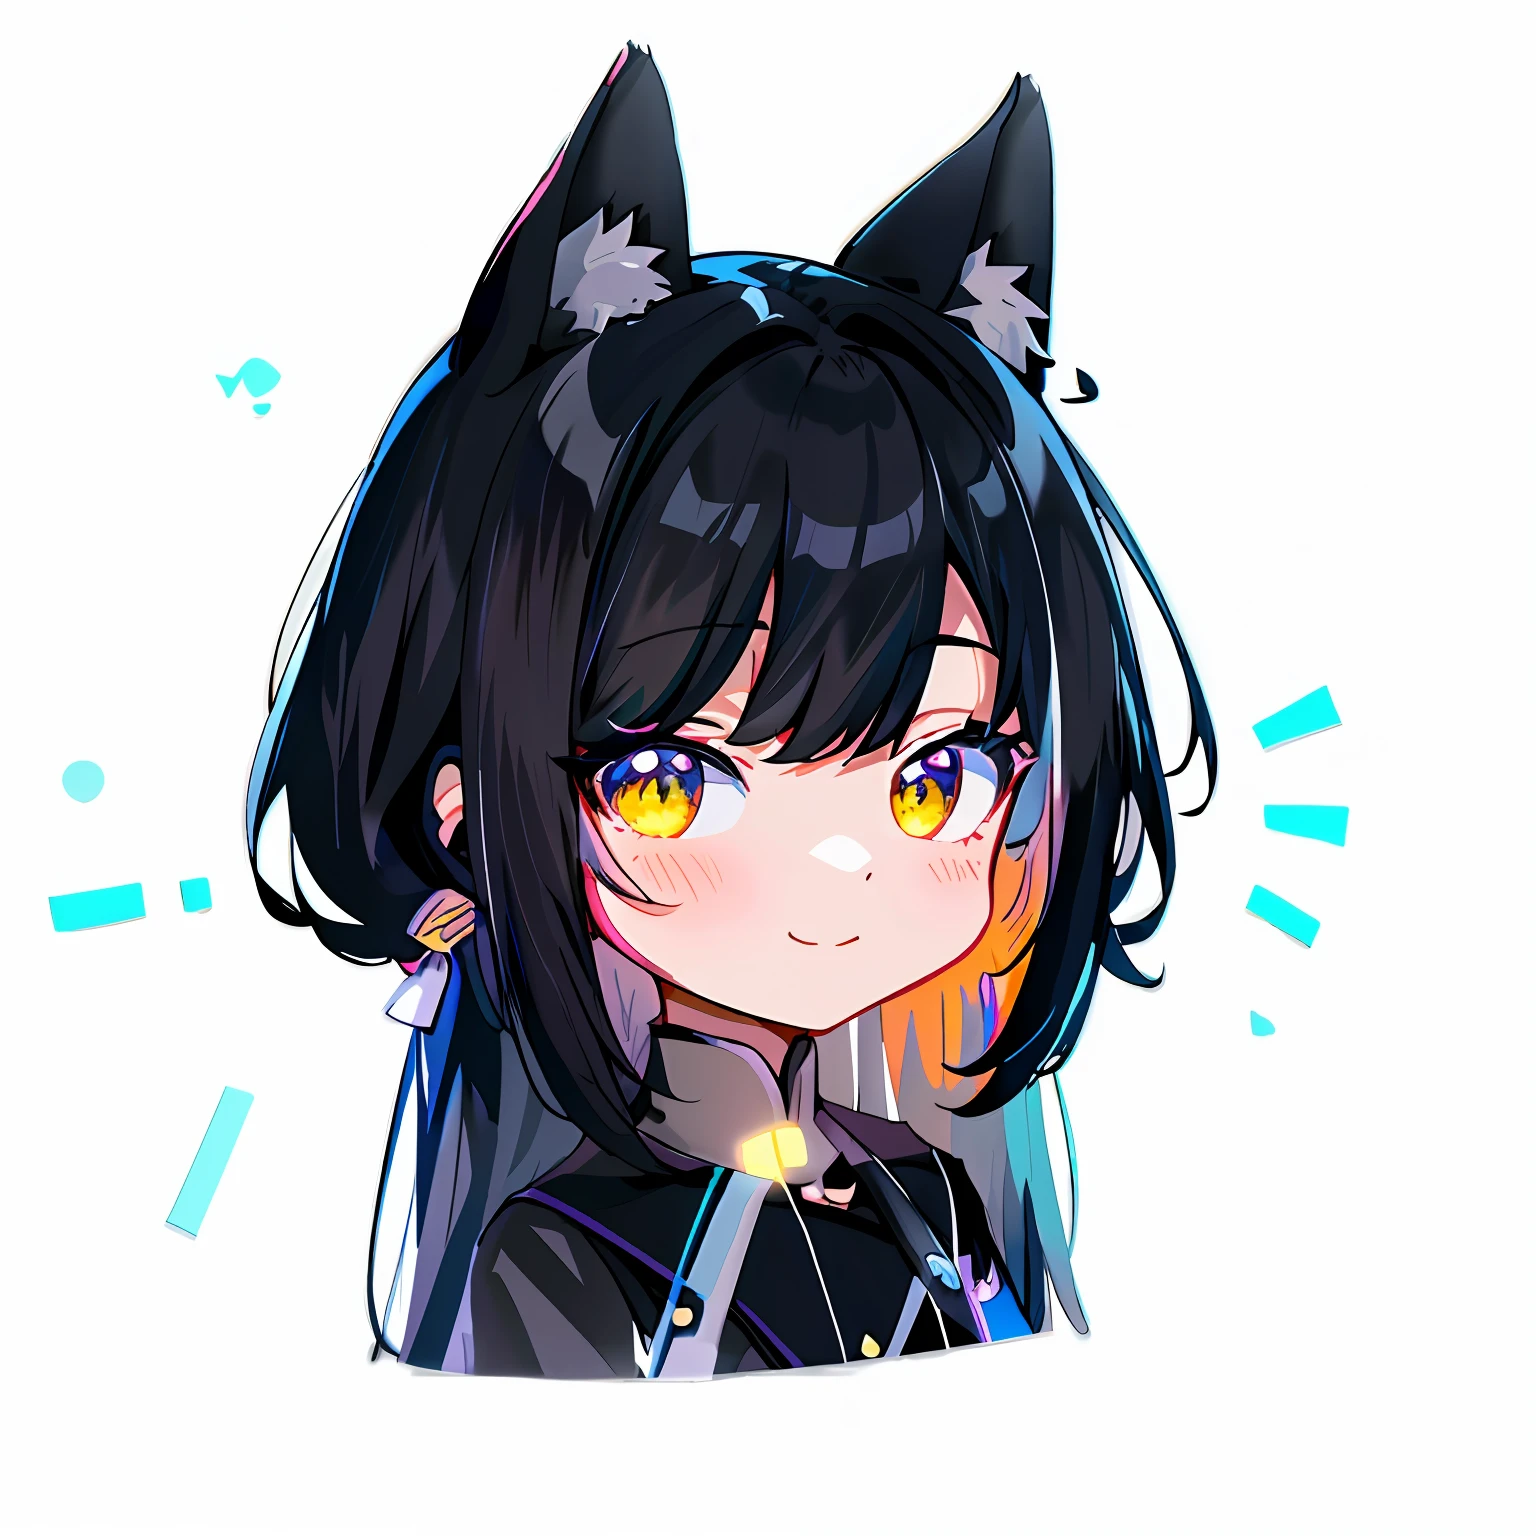 Premium Vector | Anime manga style girl with cat ears